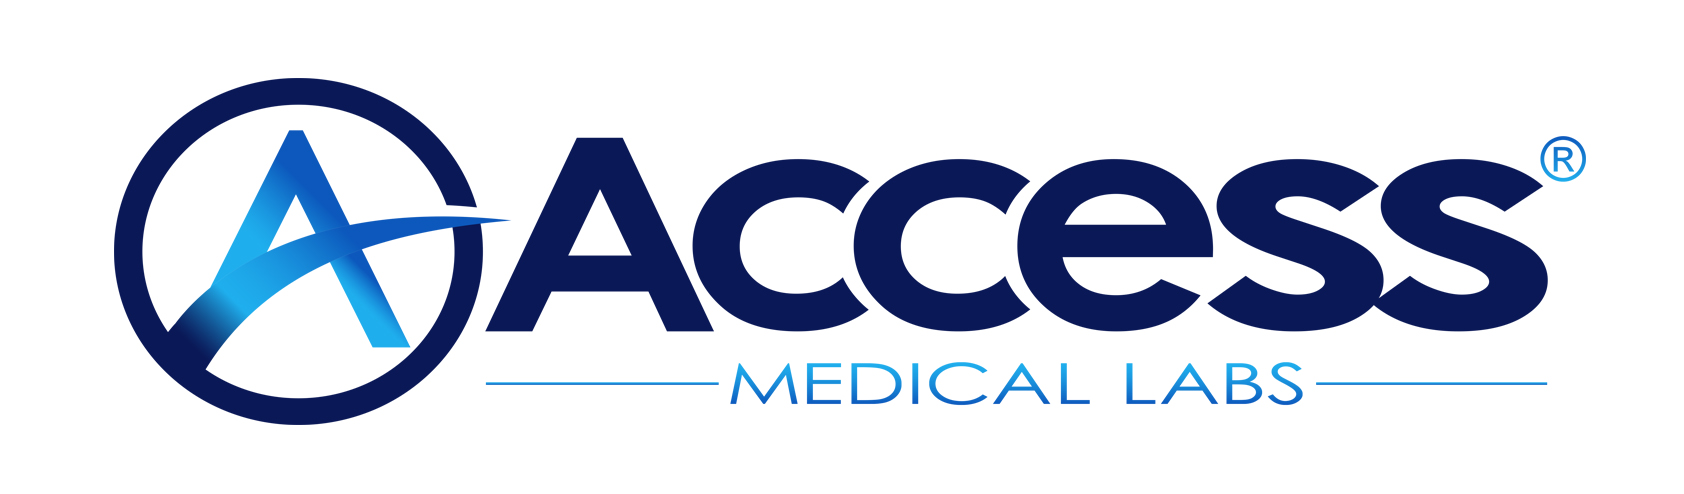 Access Medical Laboratories, Inc